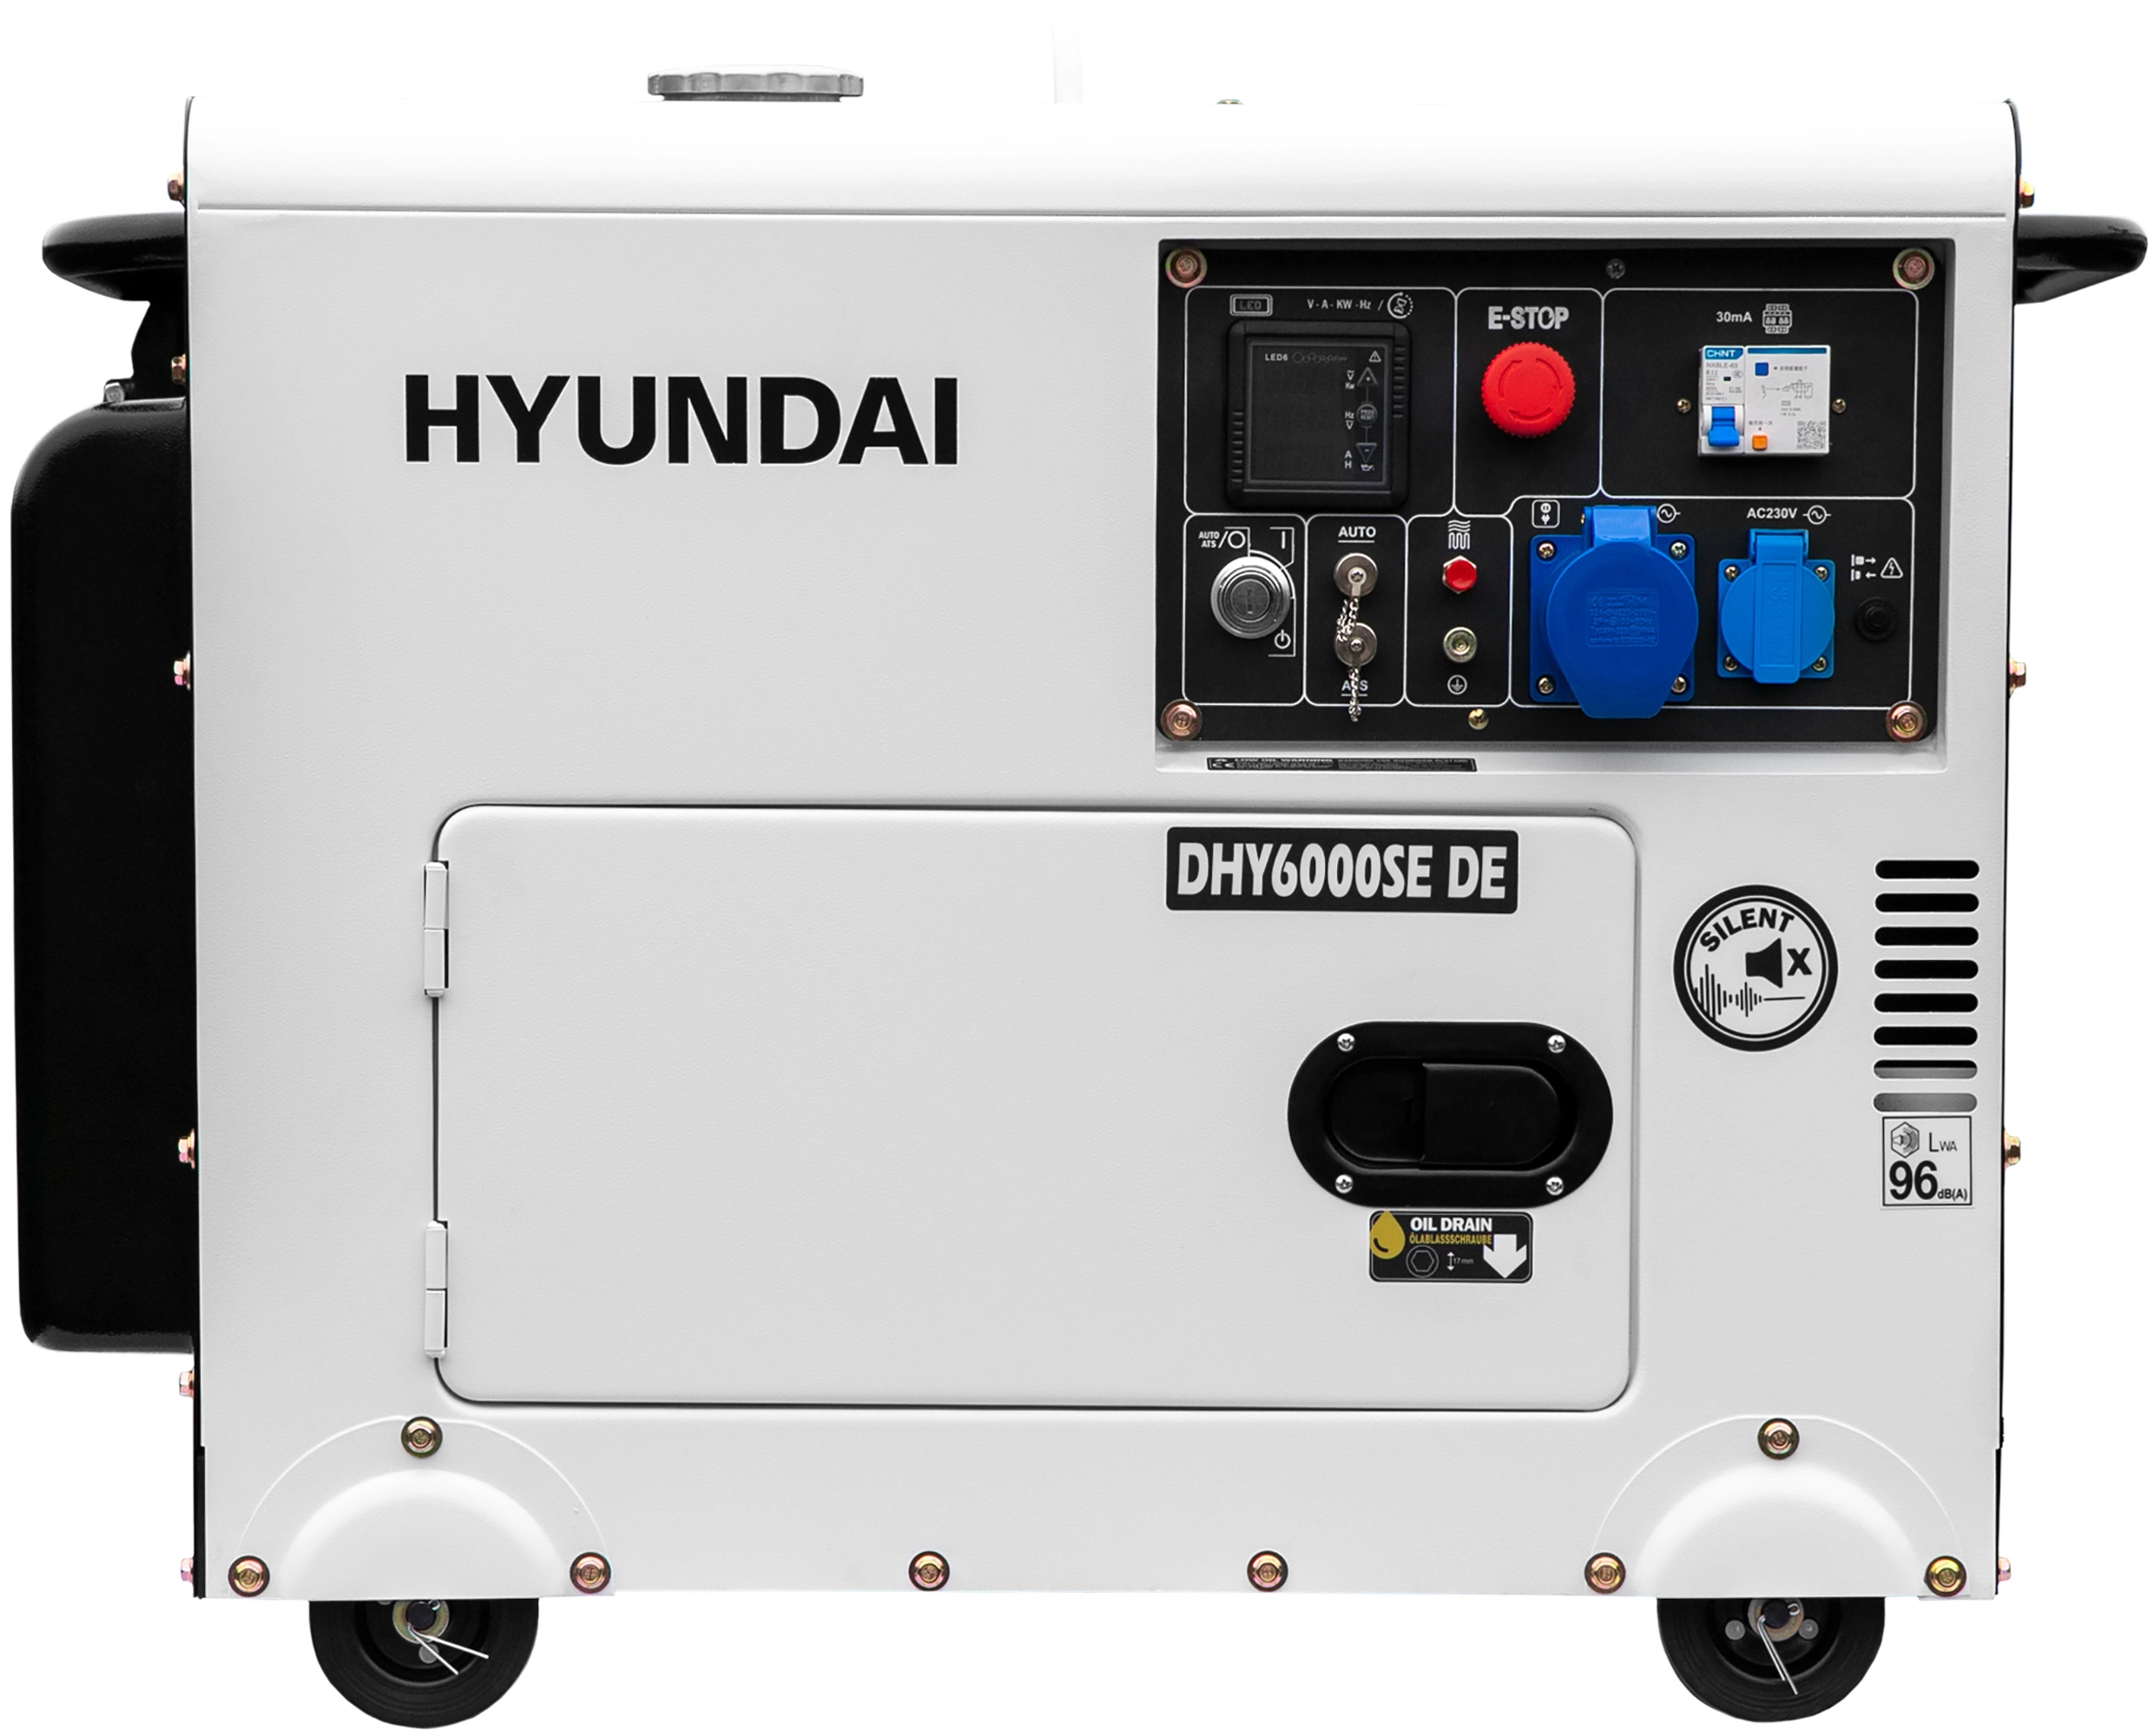 Hyundai Notstromaggregat HY8500LEK-T 7,7 kW/16,3 PS kaufen bei OBI